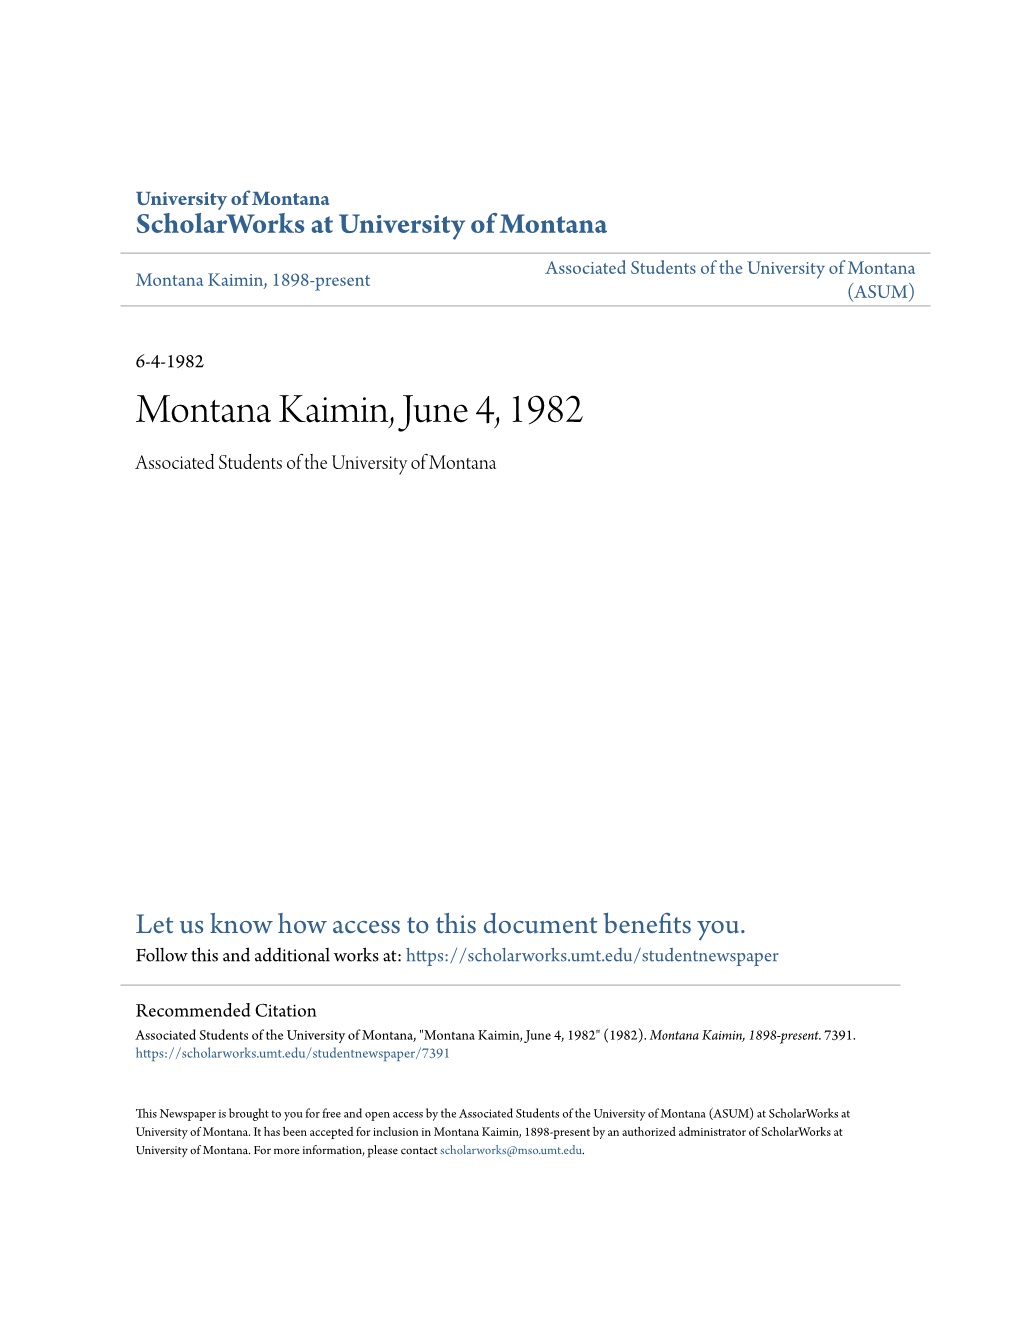 Montana Kaimin, June 4, 1982 Associated Students of the University of Montana